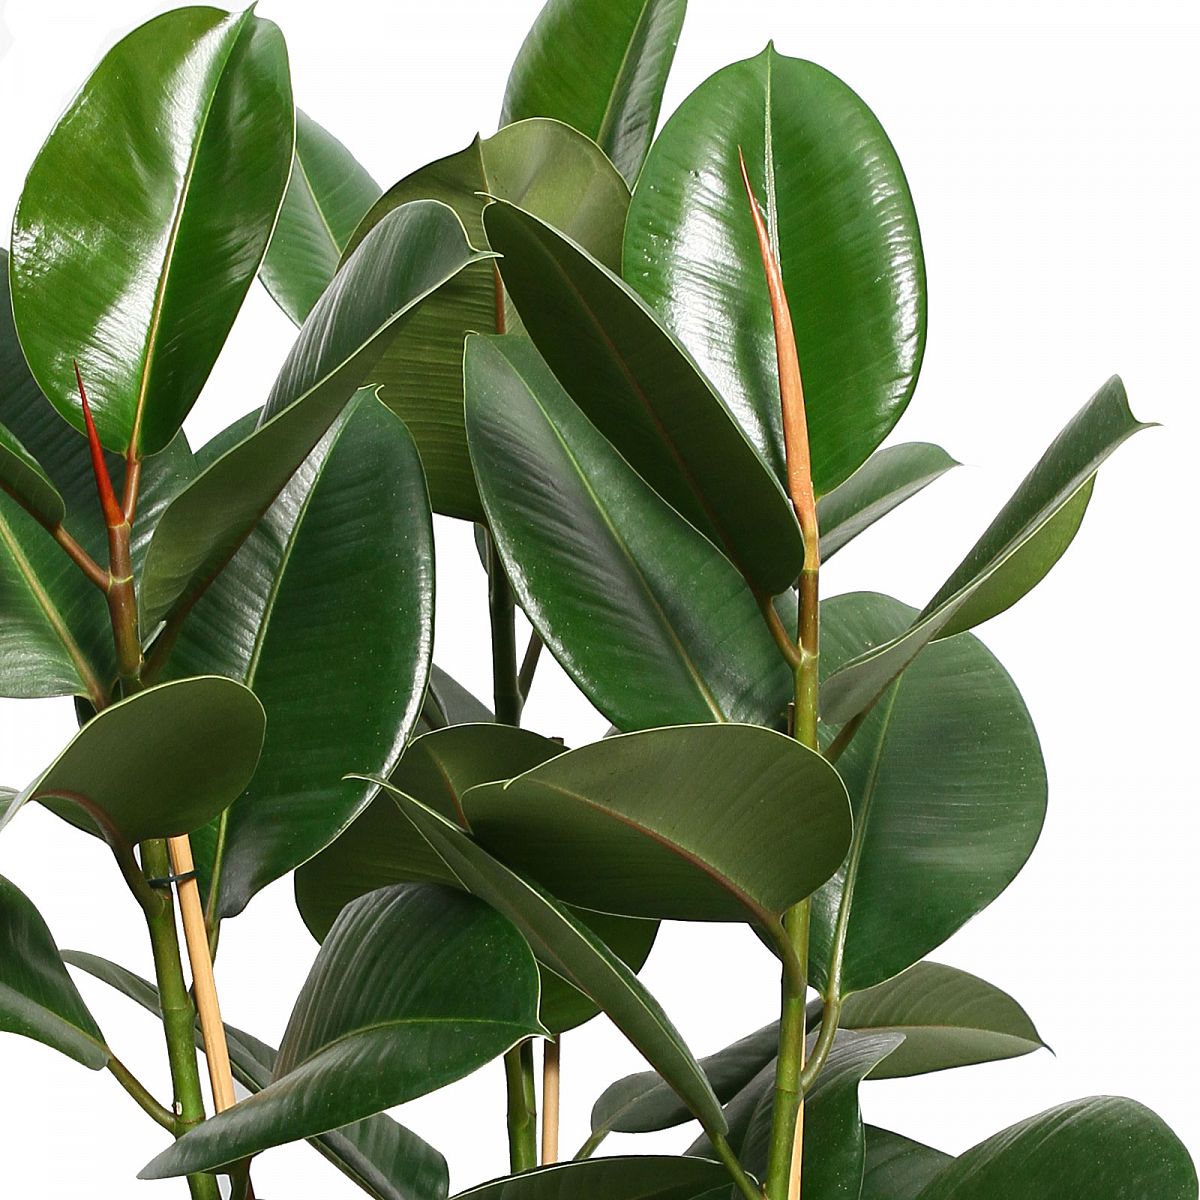 Lush Rubber Plant Ficus elastica 'Robusta' Indoor House Plants